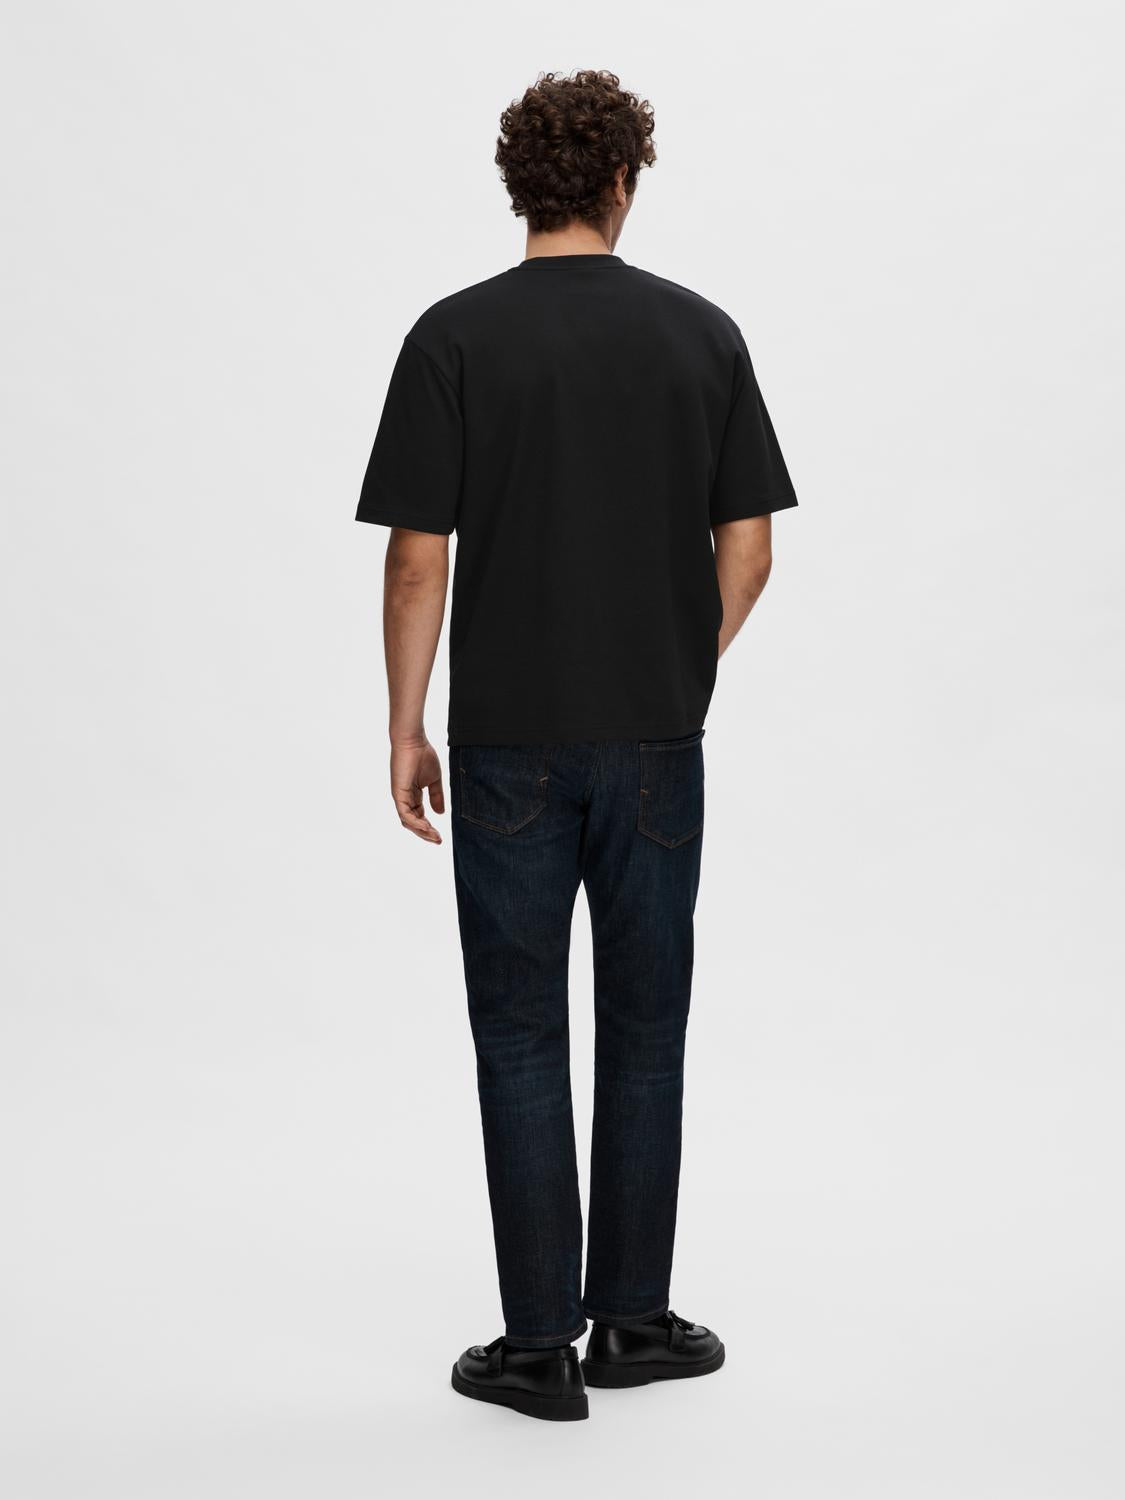 SLHLOOSEOSCAR T-Shirt - Black